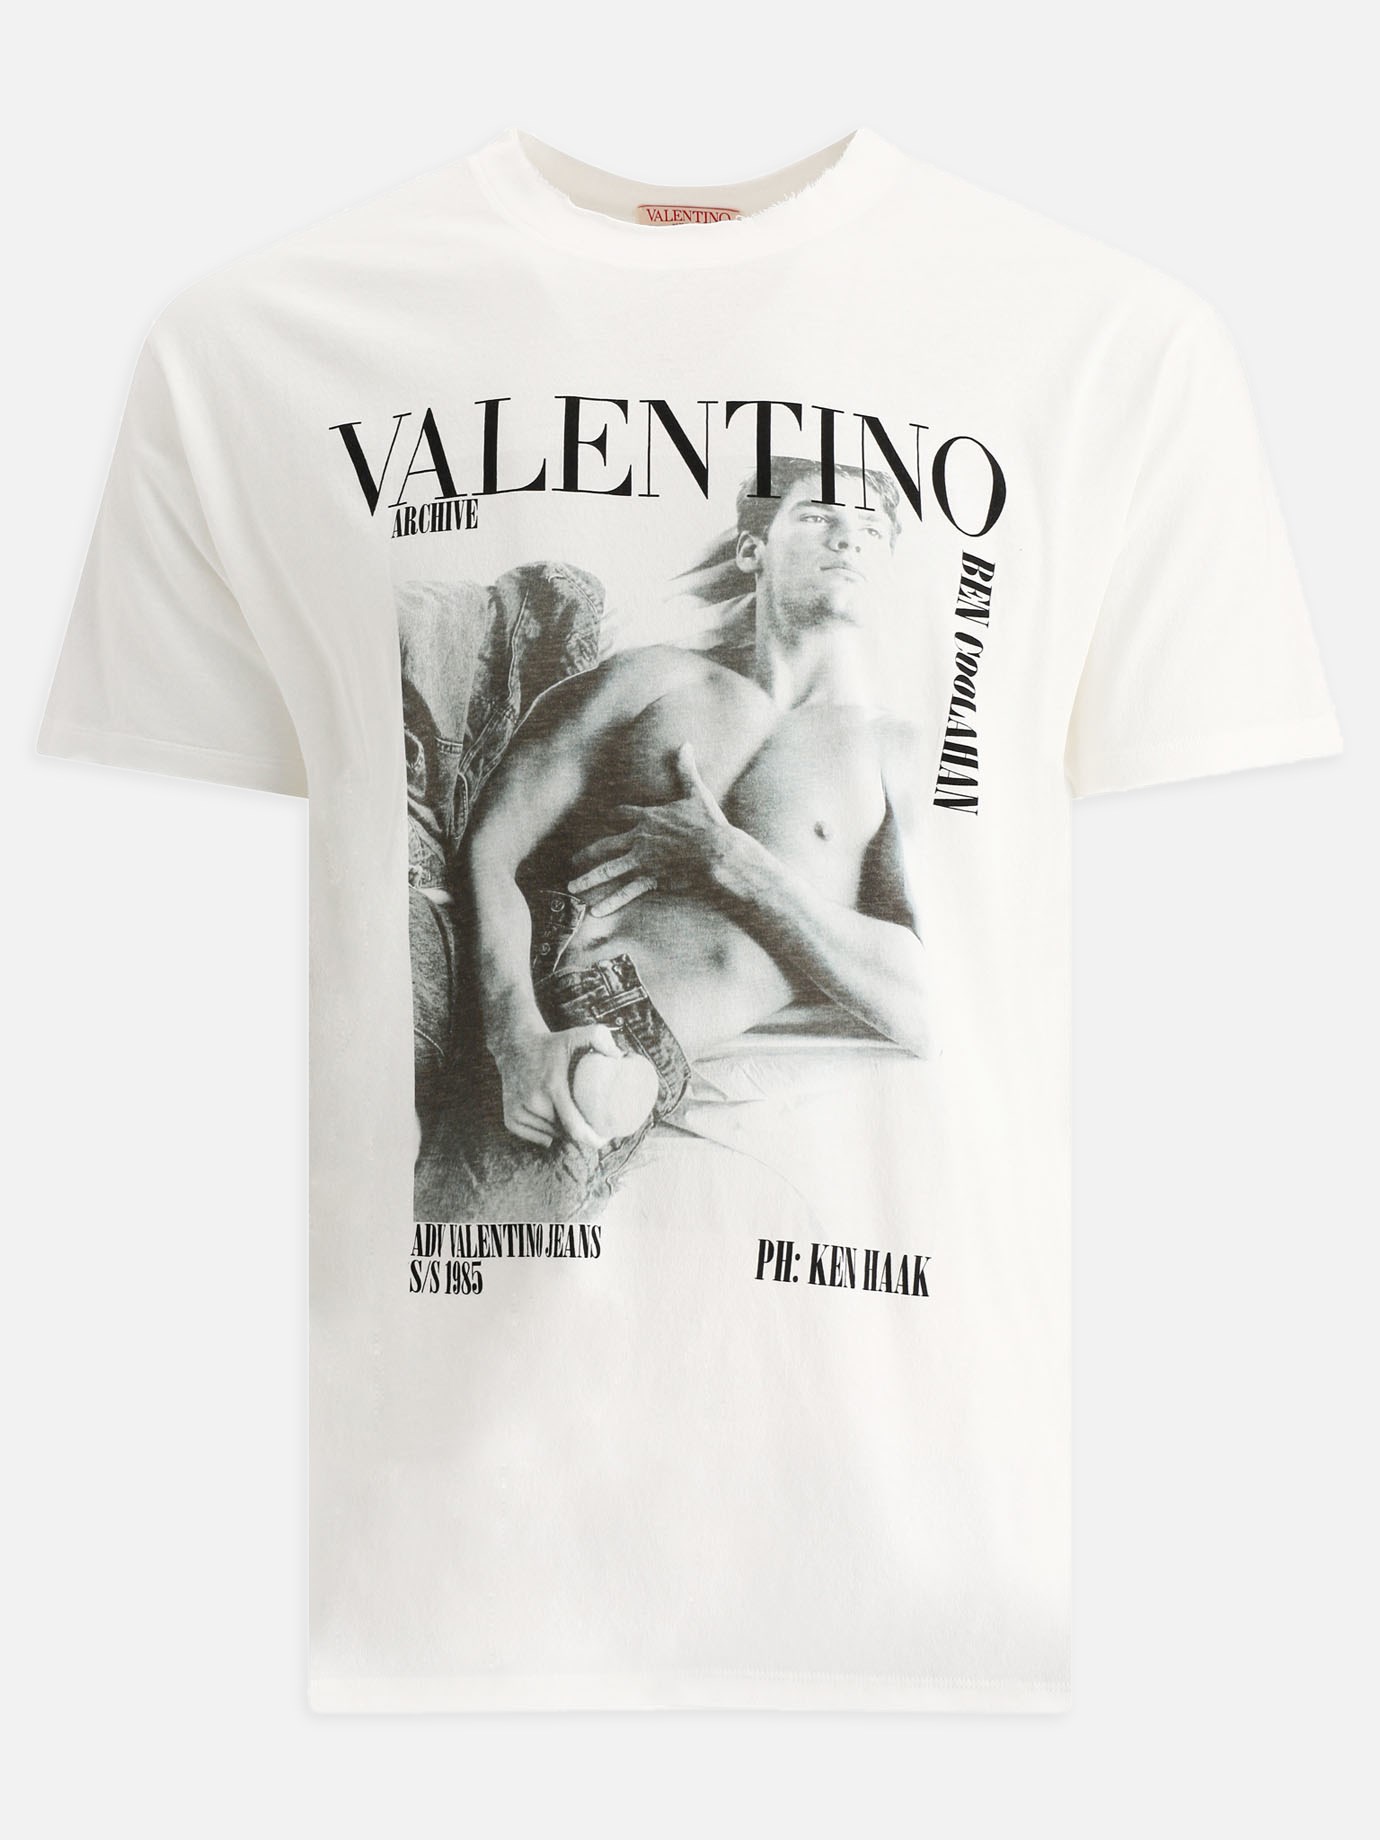  Vintage 1985  t-shirtby Valentino - 2